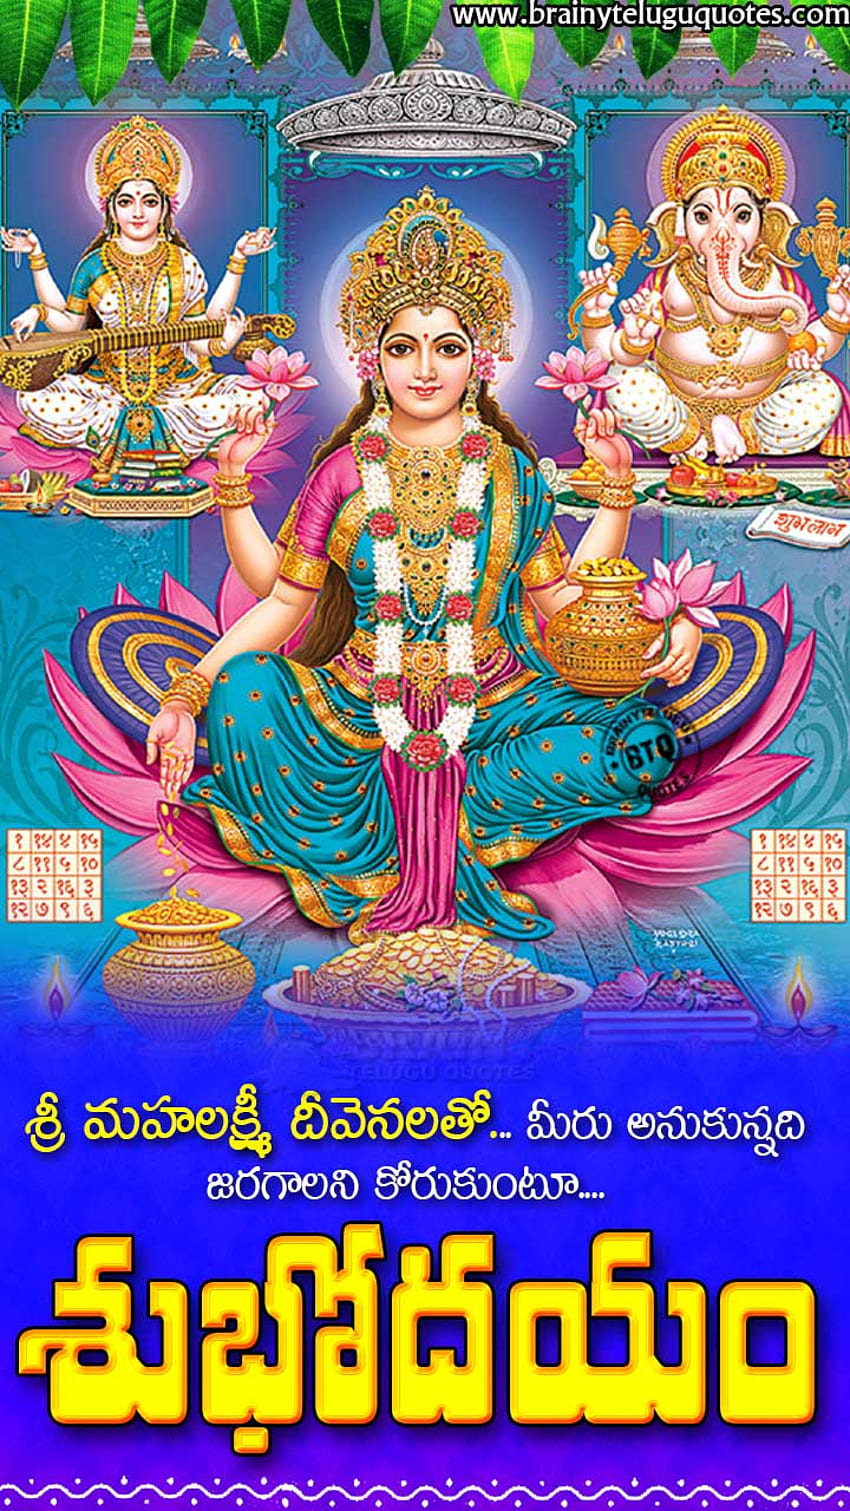 Goddess lakshmi with good morning bhakti stotram in telugu. Telugu ...